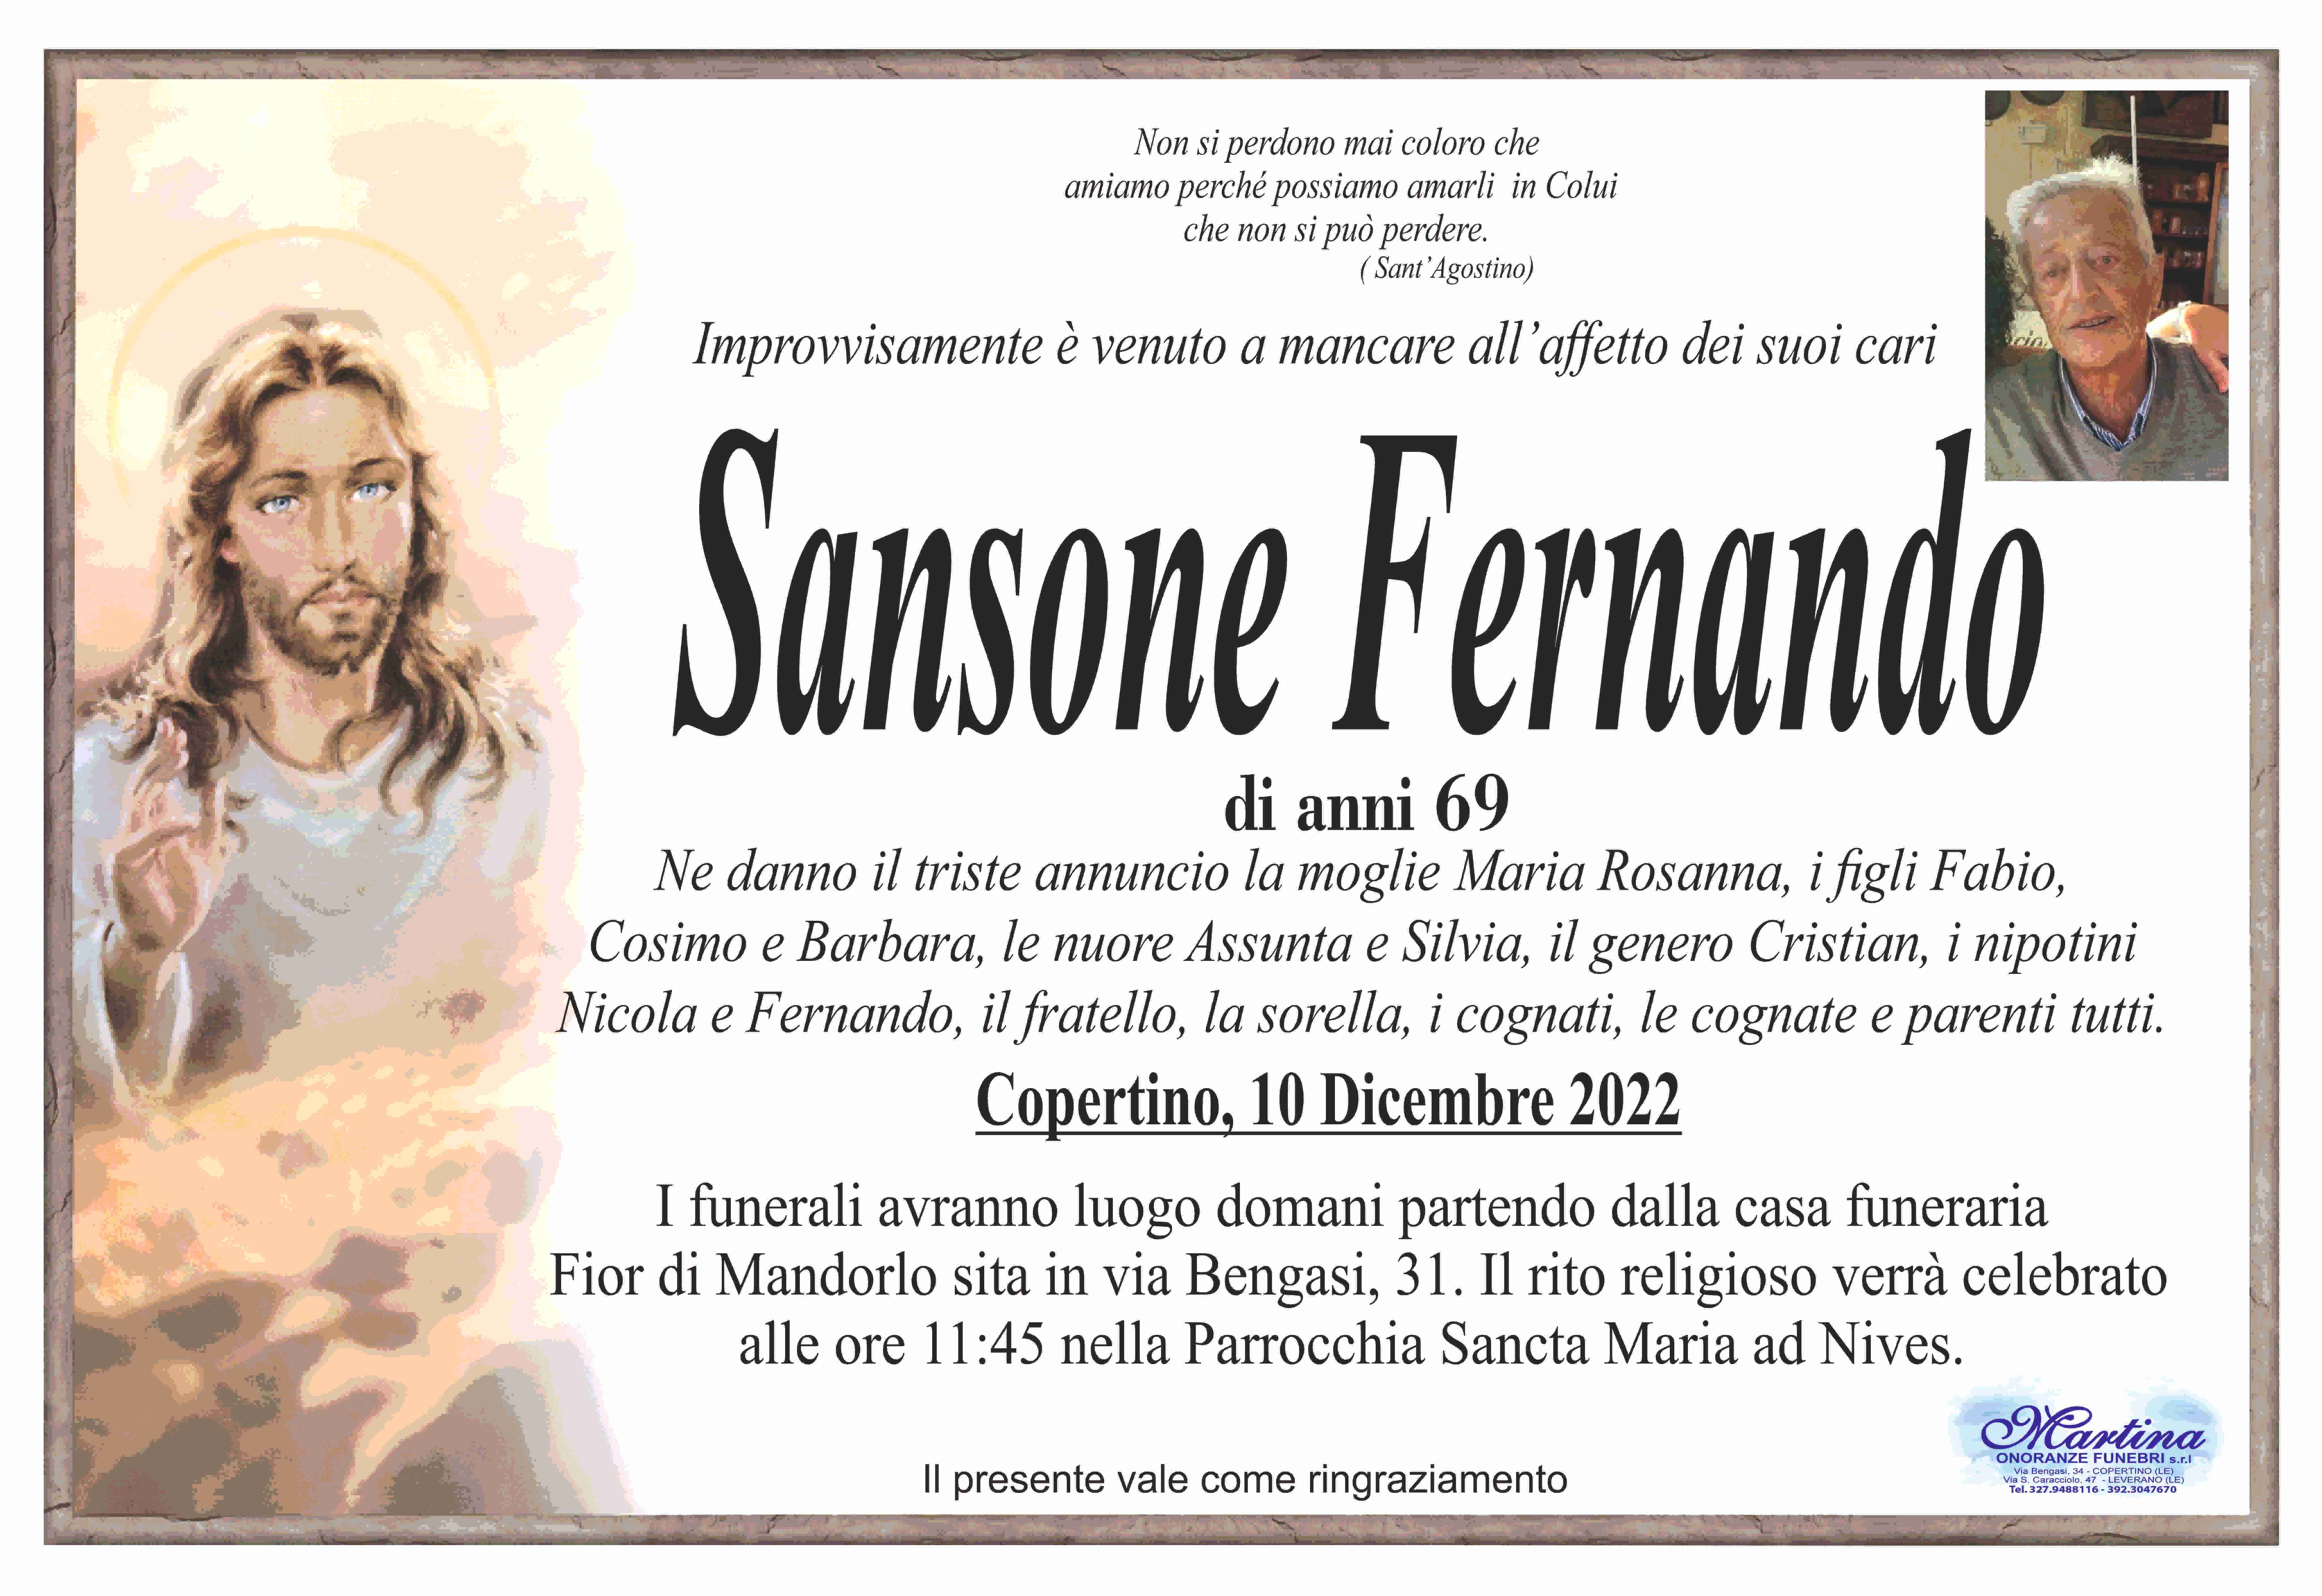 Fernando Sansone